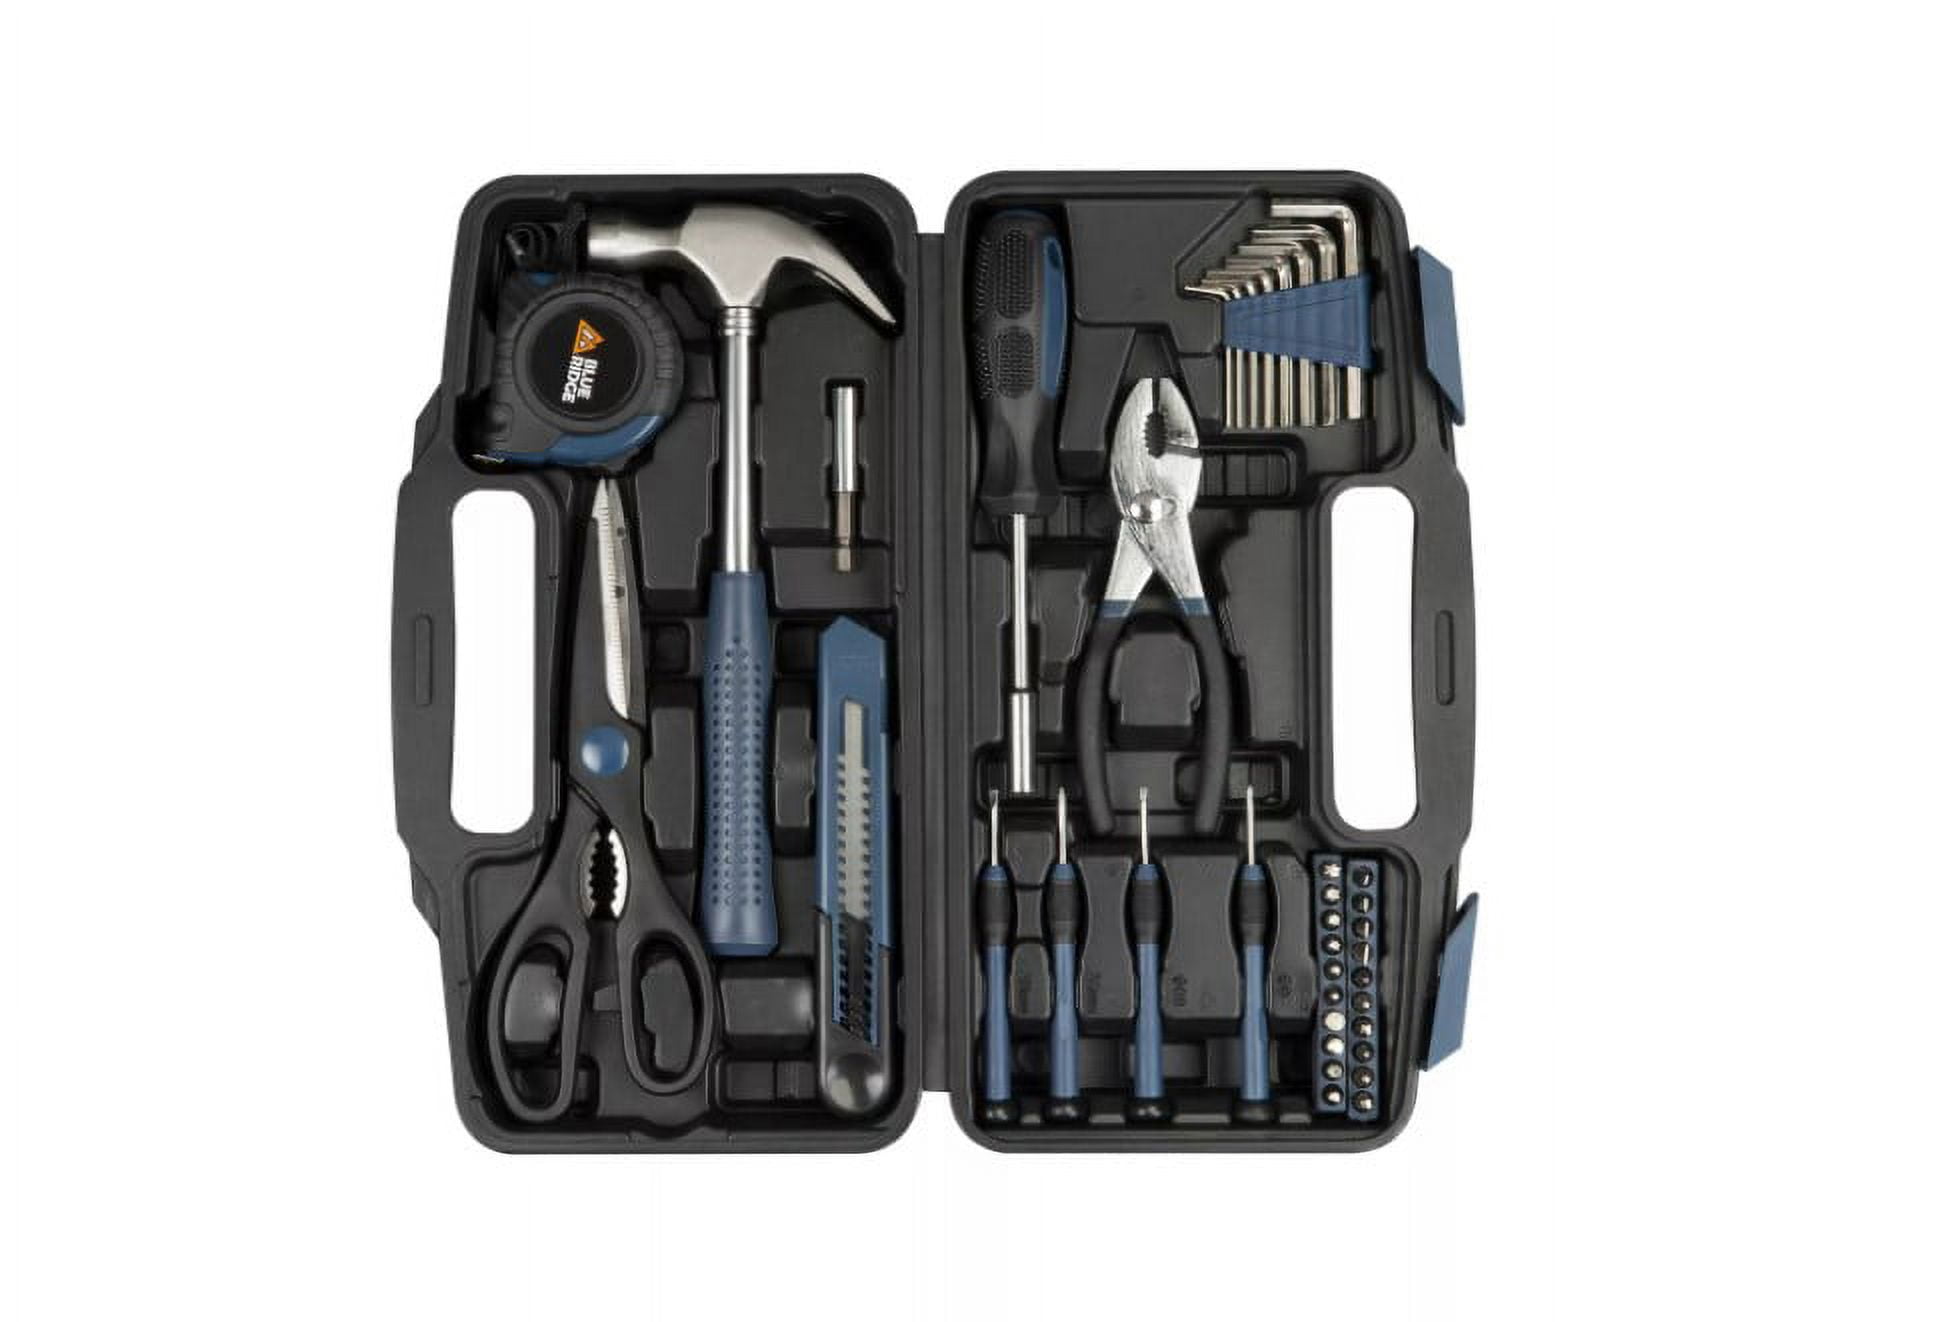 Blue Ridge Tools 47pc Household Tool Kit